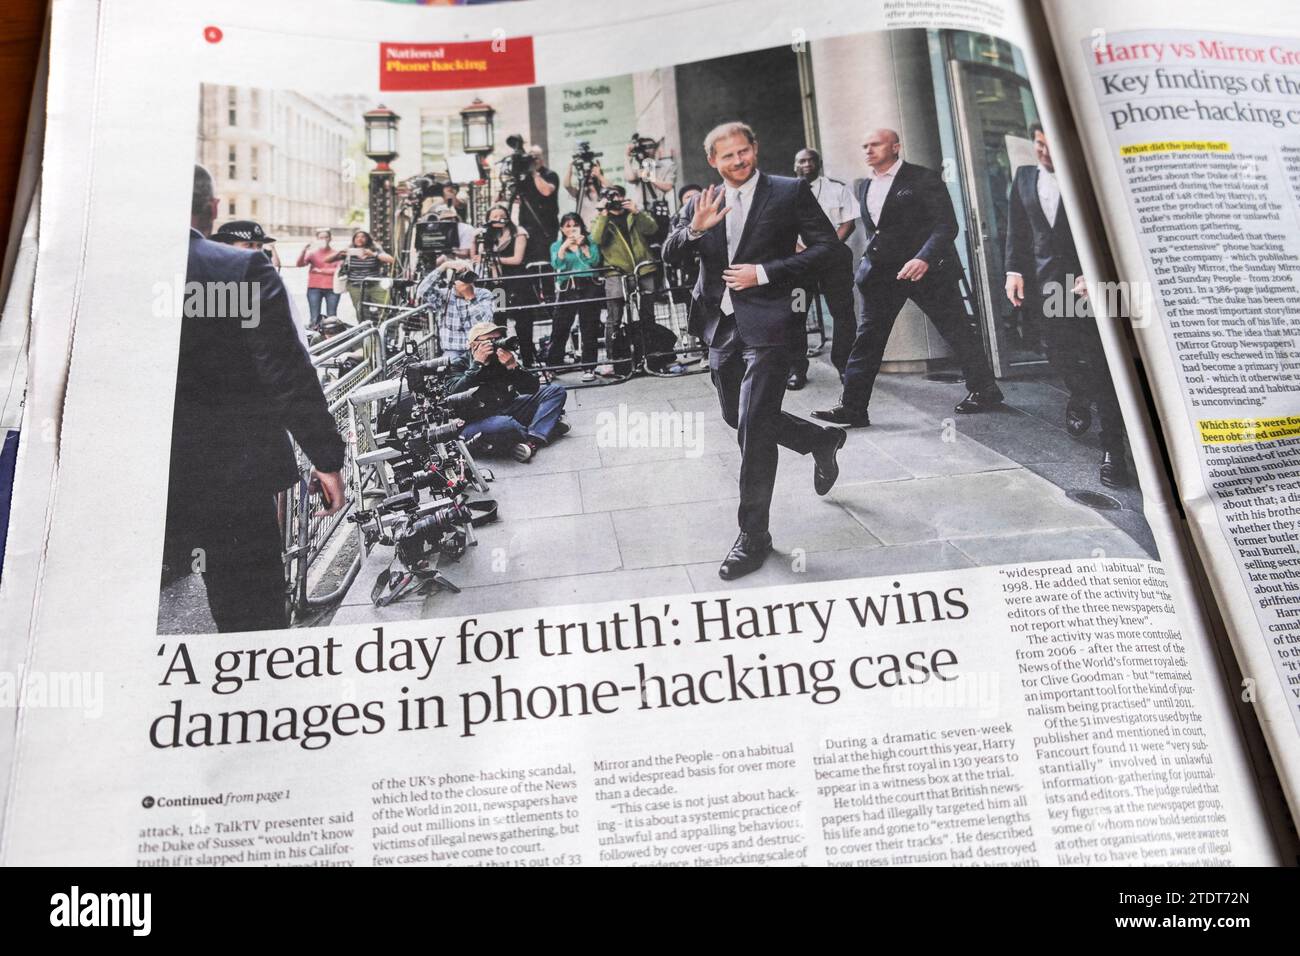 "A Great Day for Truth" (principe) Harry vince Damages in Phone hacking Case", titolo del quotidiano Guardian in tribunale il 16 dicembre 2023 Londra Inghilterra Regno Unito Foto Stock